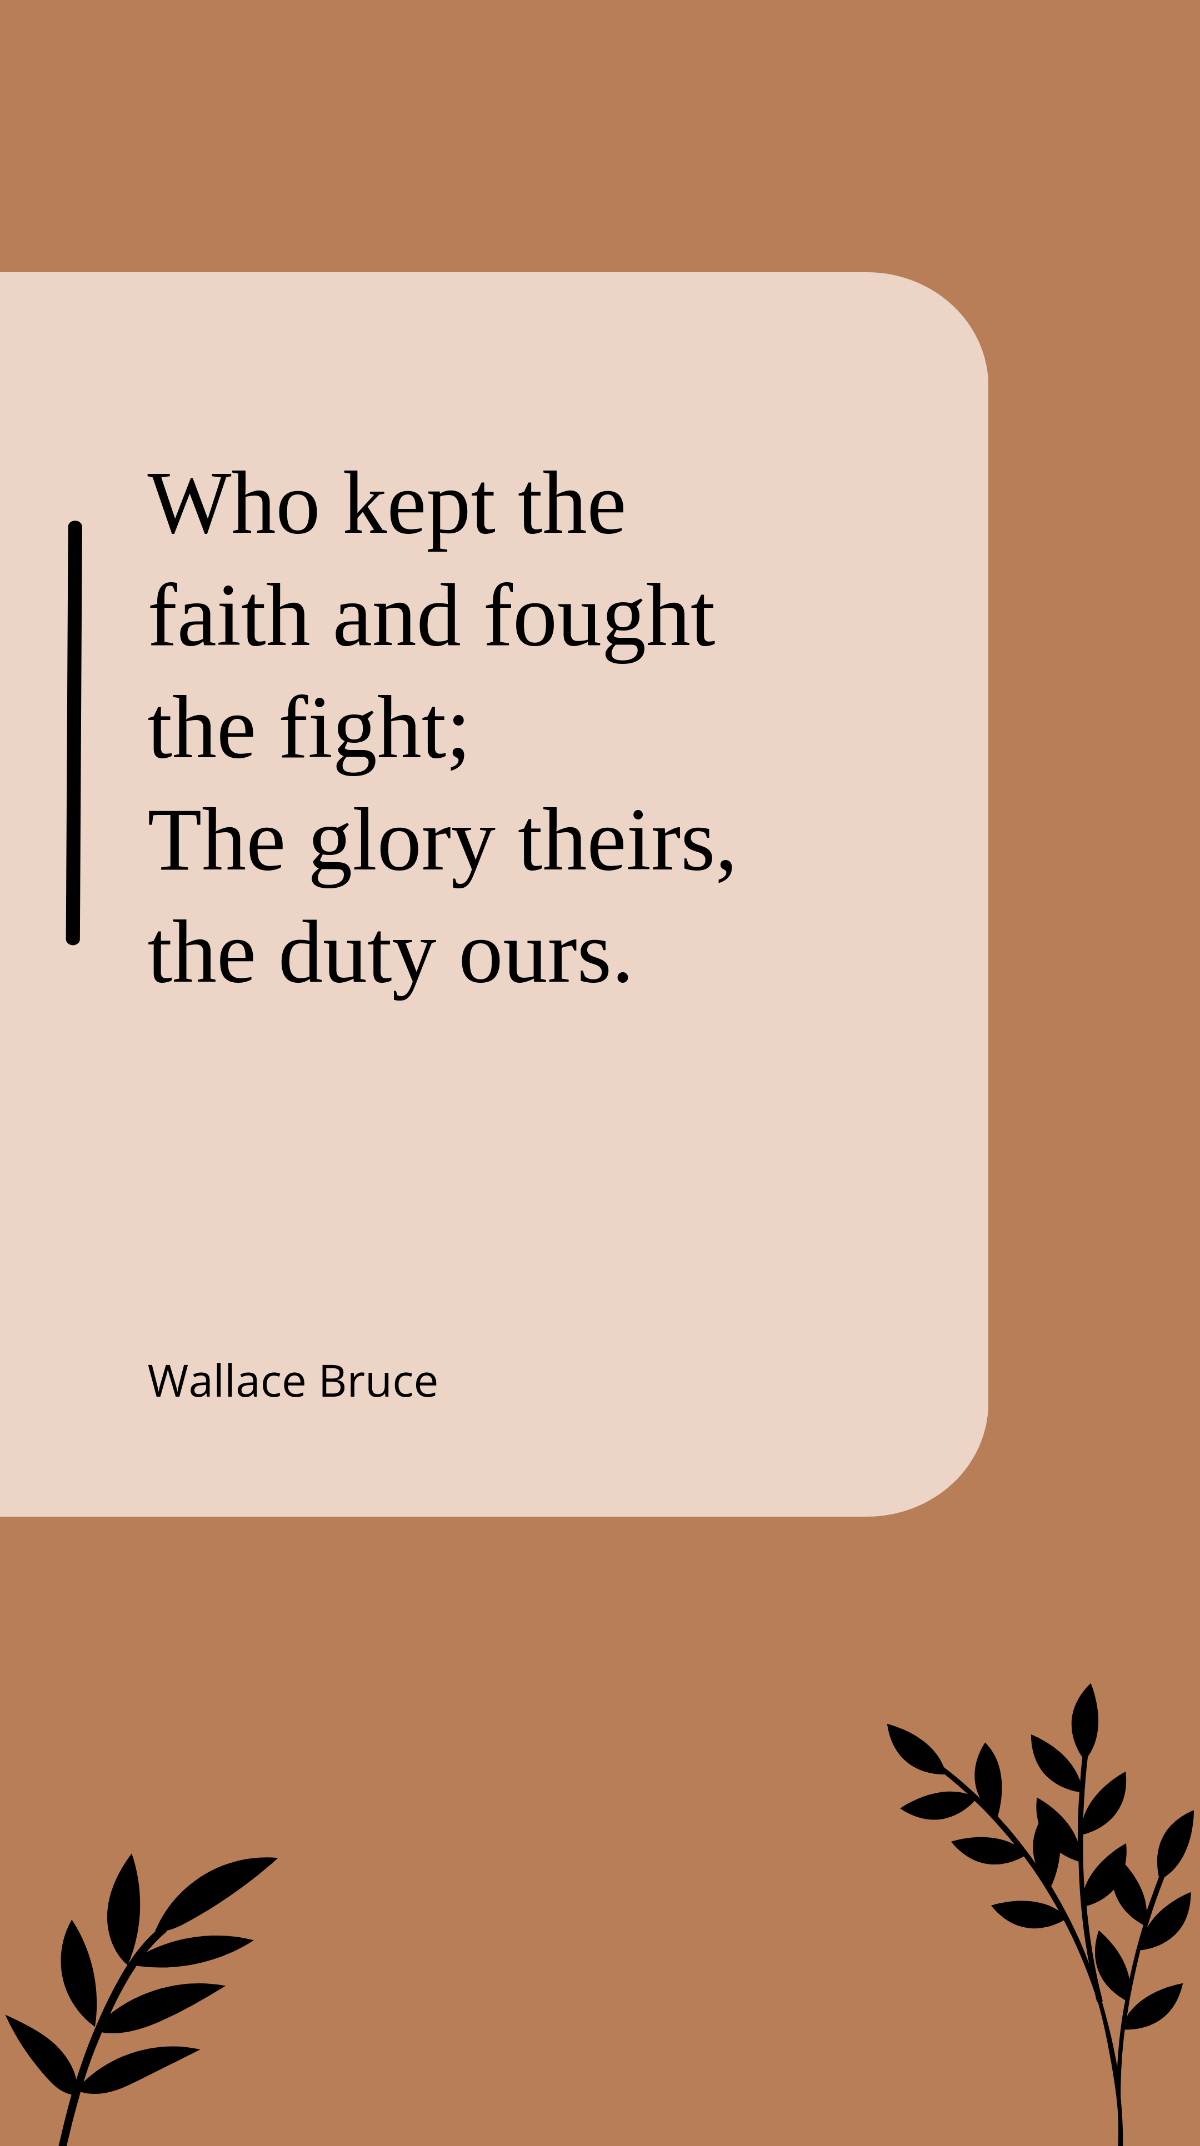 Wallace Bruce - 